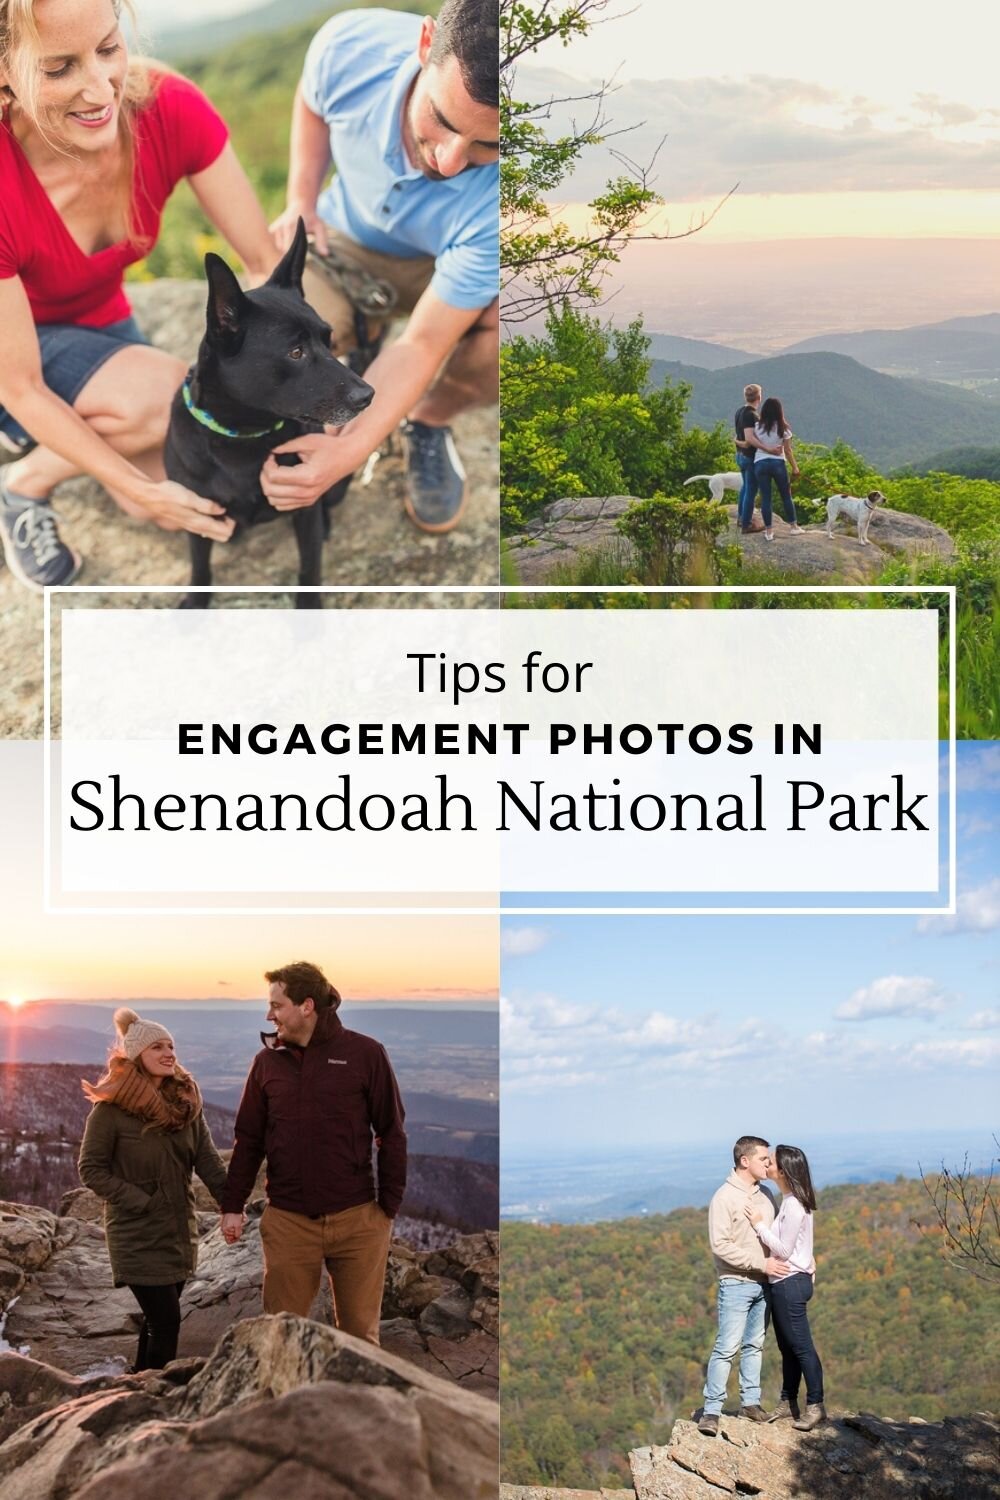 _shenandoah - how to take engagement photos 3.jpg